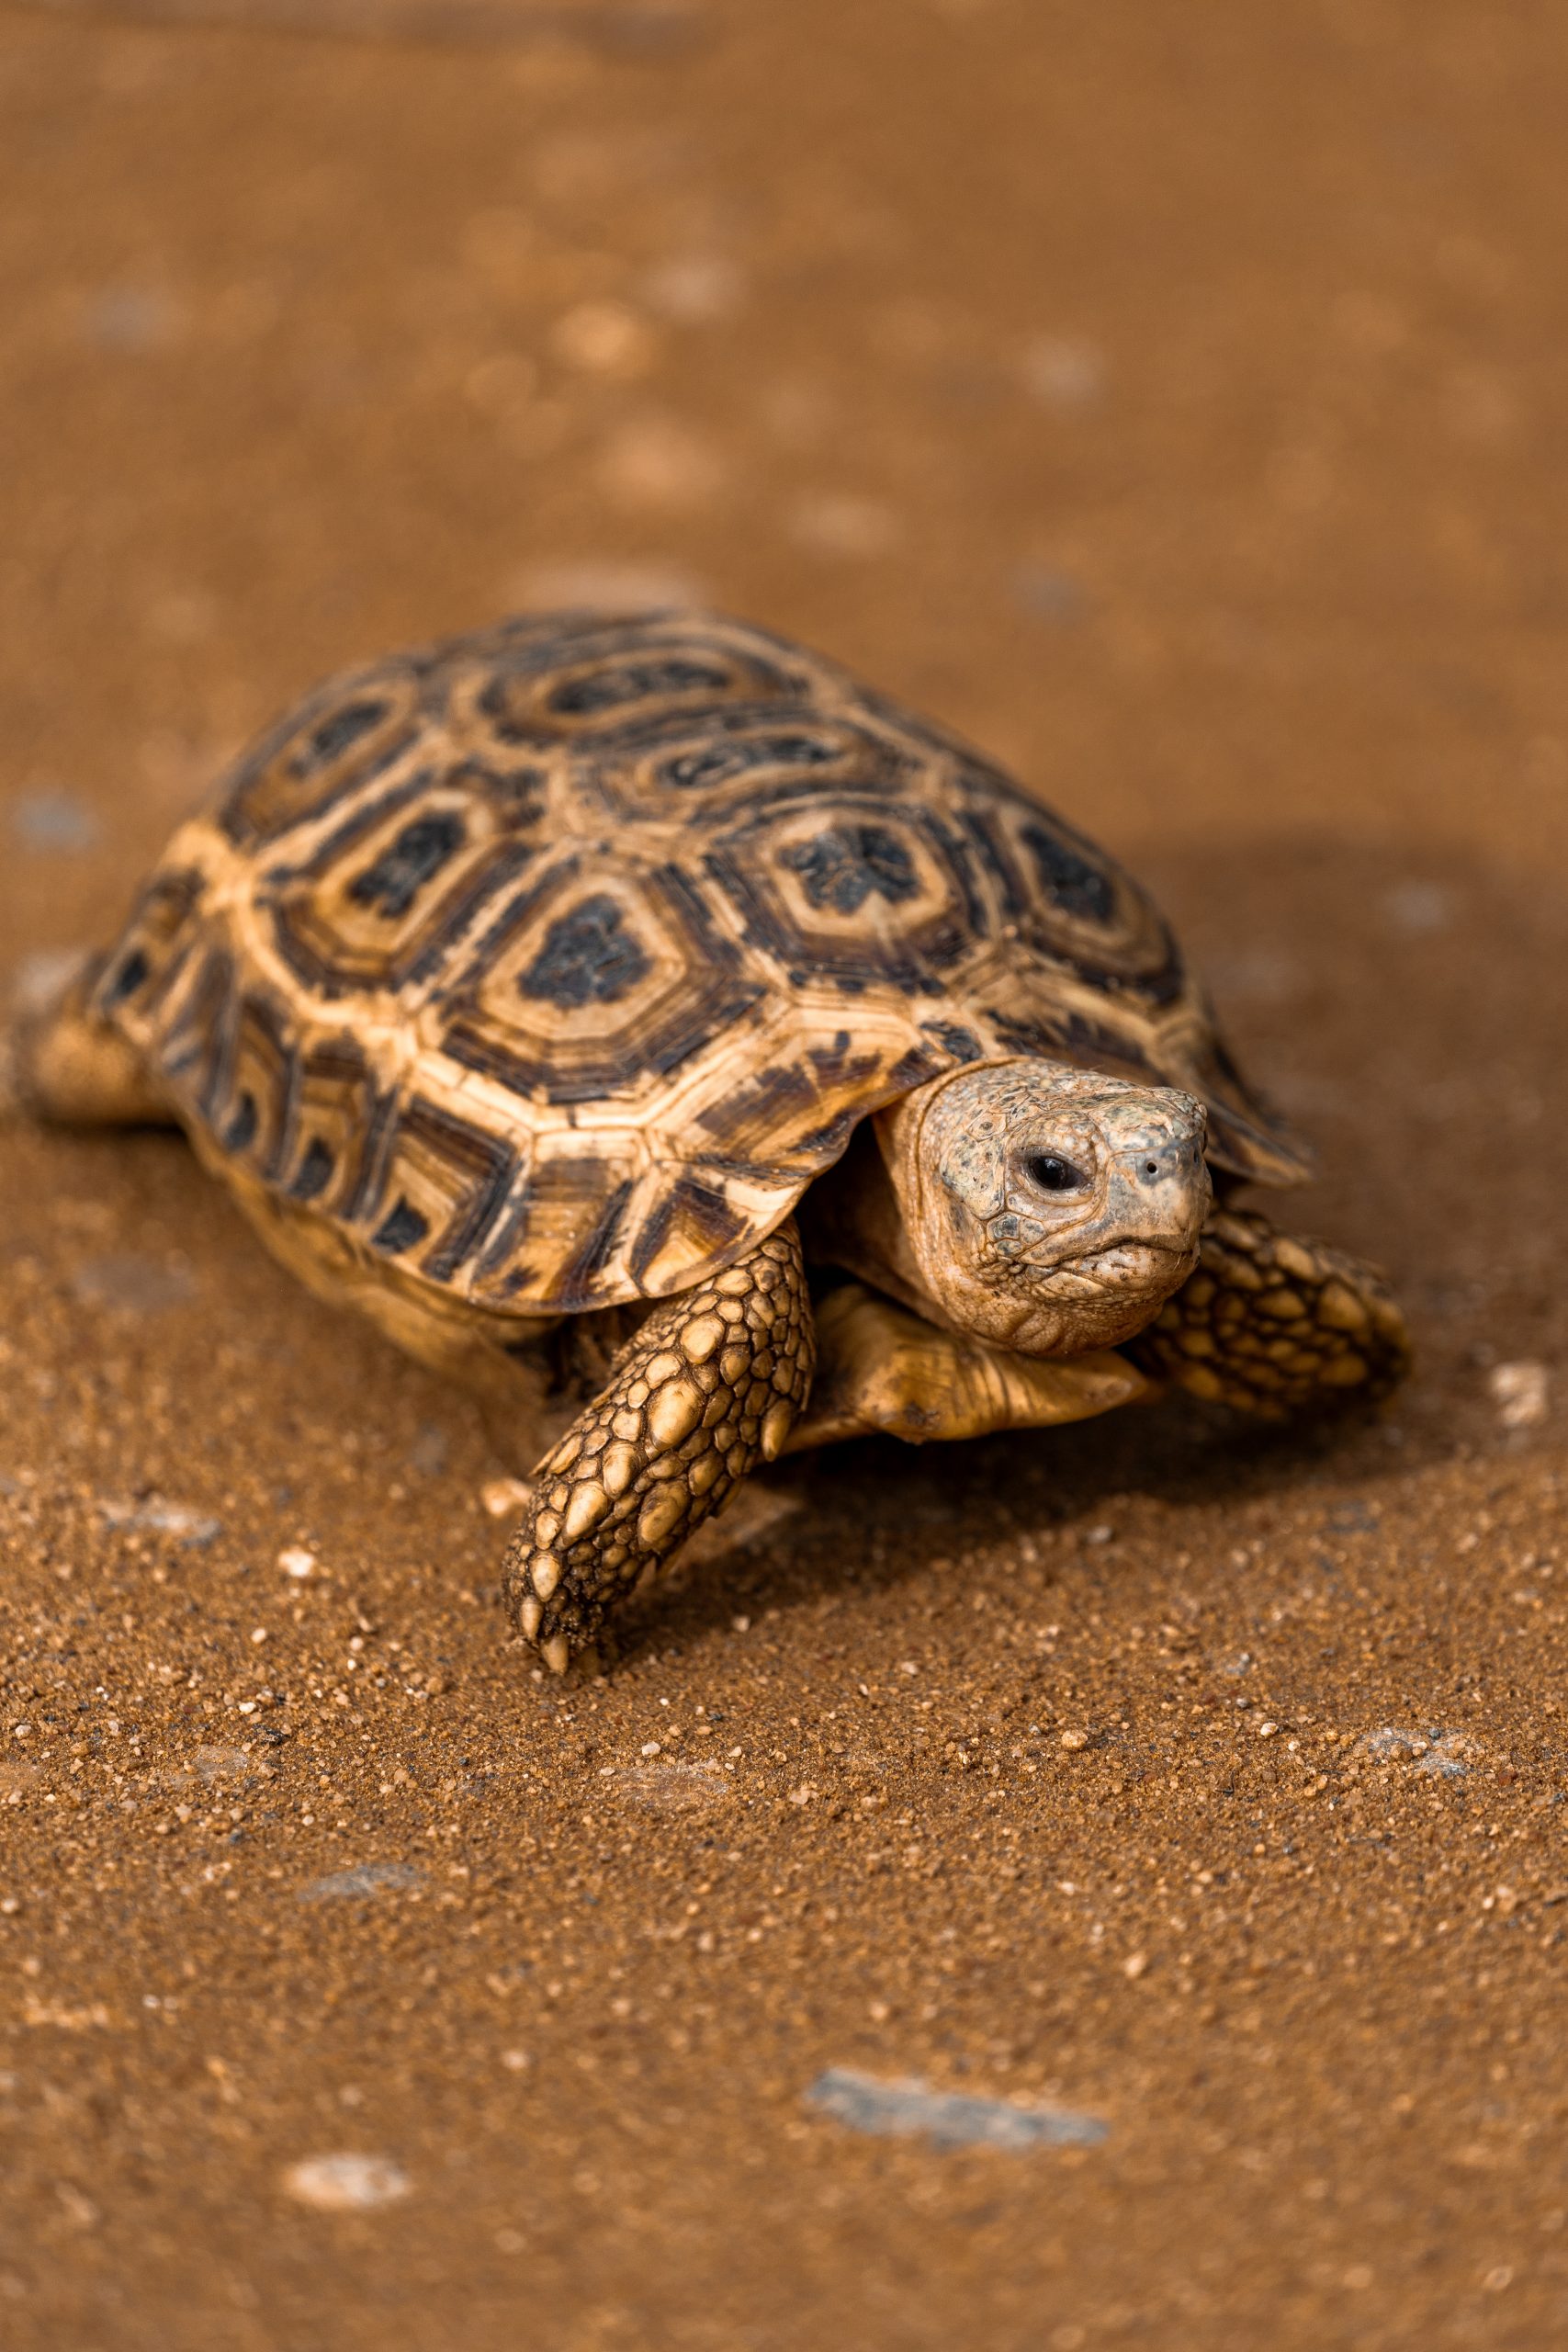 Turtle on sandy ground